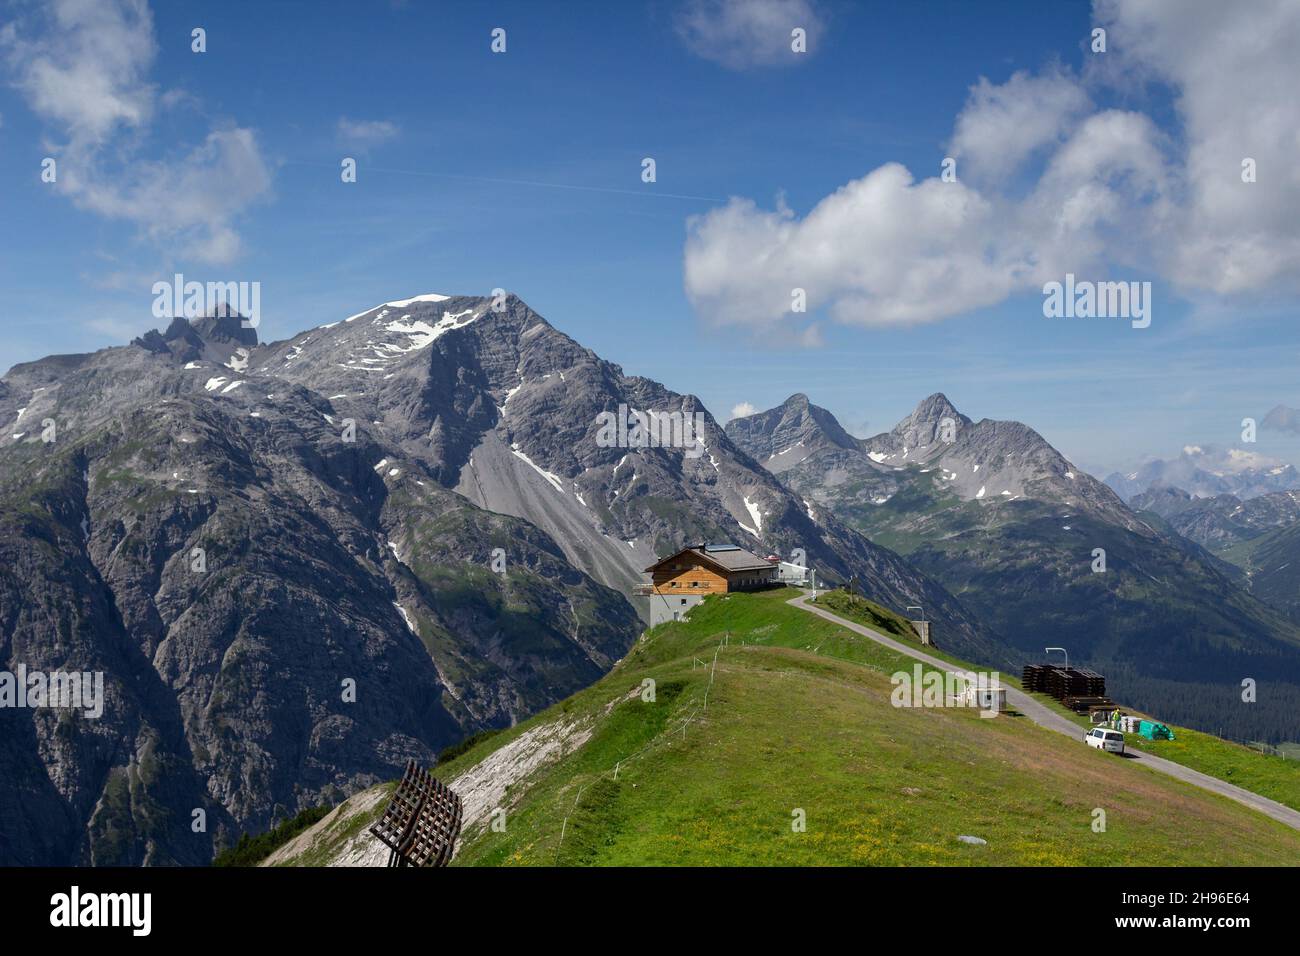 Lech, Austria: Balmalp alpine hut (2100 m), near the summit of Kriegerhorn, Vorarlberg mountains. Backdrop is Unterer Schafberg and Mehlsack. Stock Photo